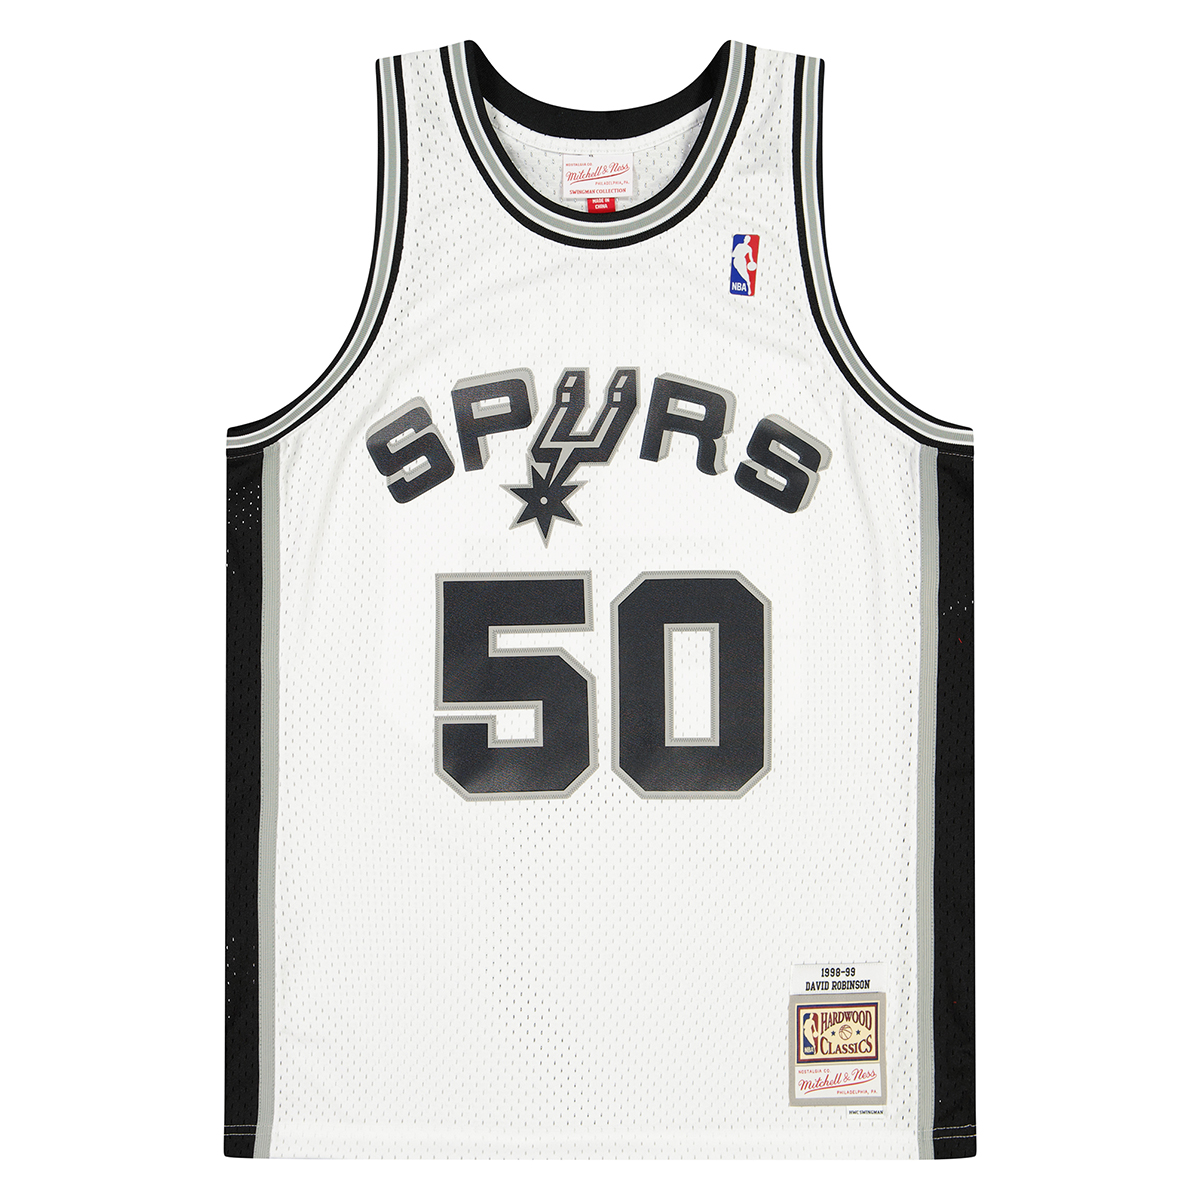 Authentic David Robinson San Antonio Spurs Finals 2002-03 Jersey